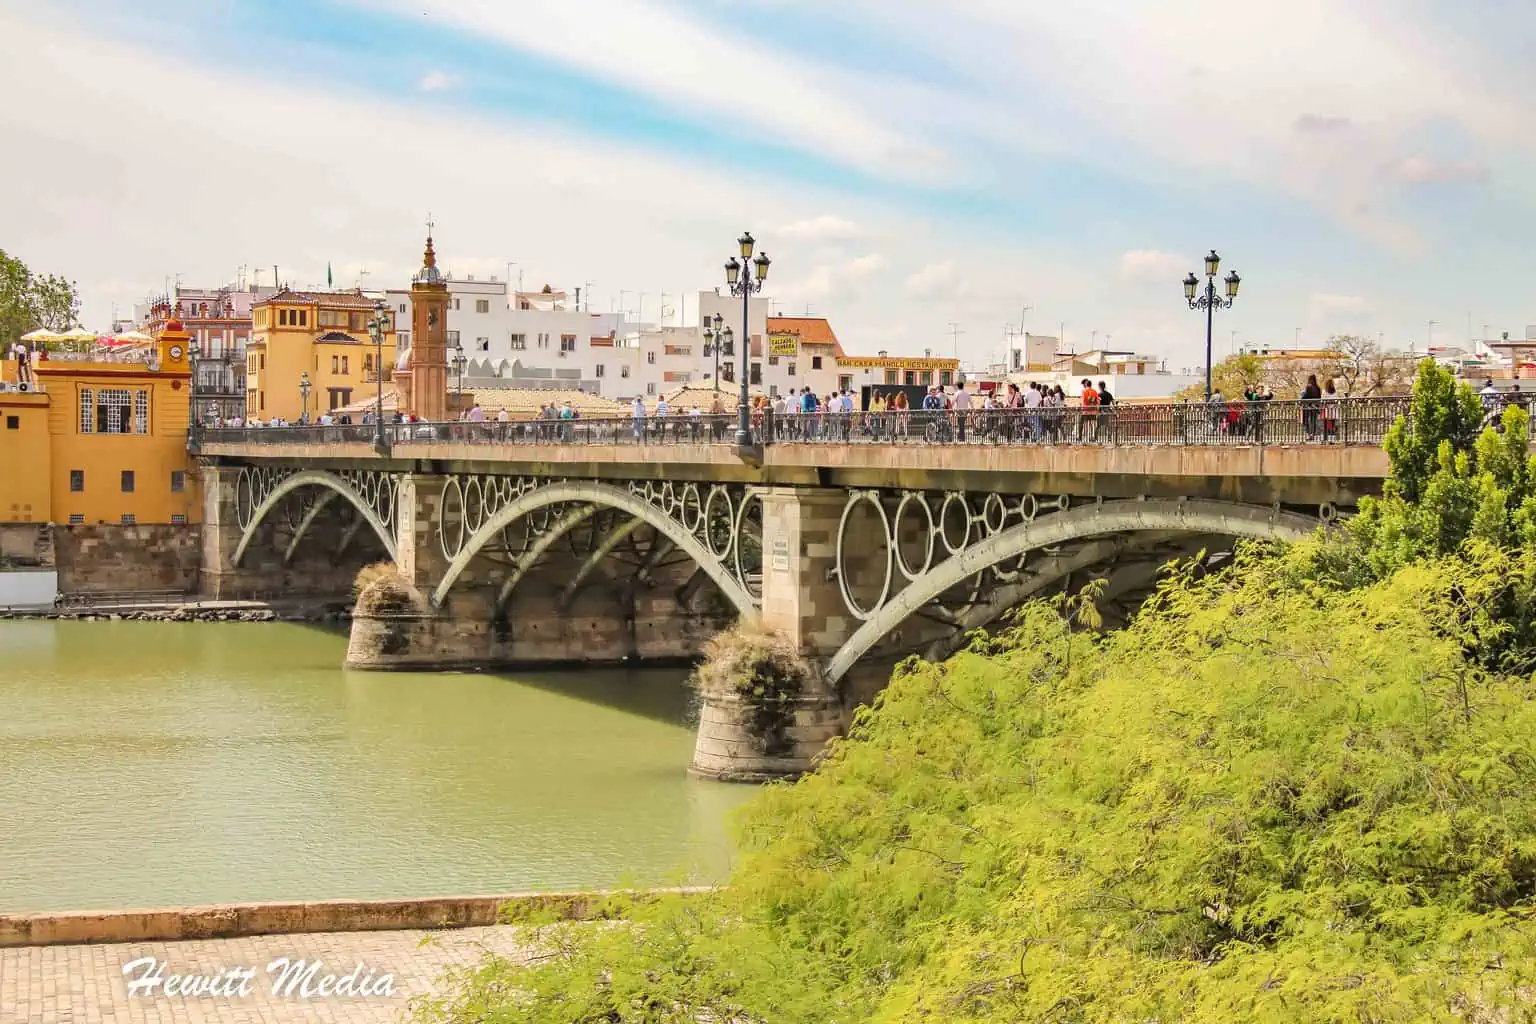 Europe's Top Destinations - Seville